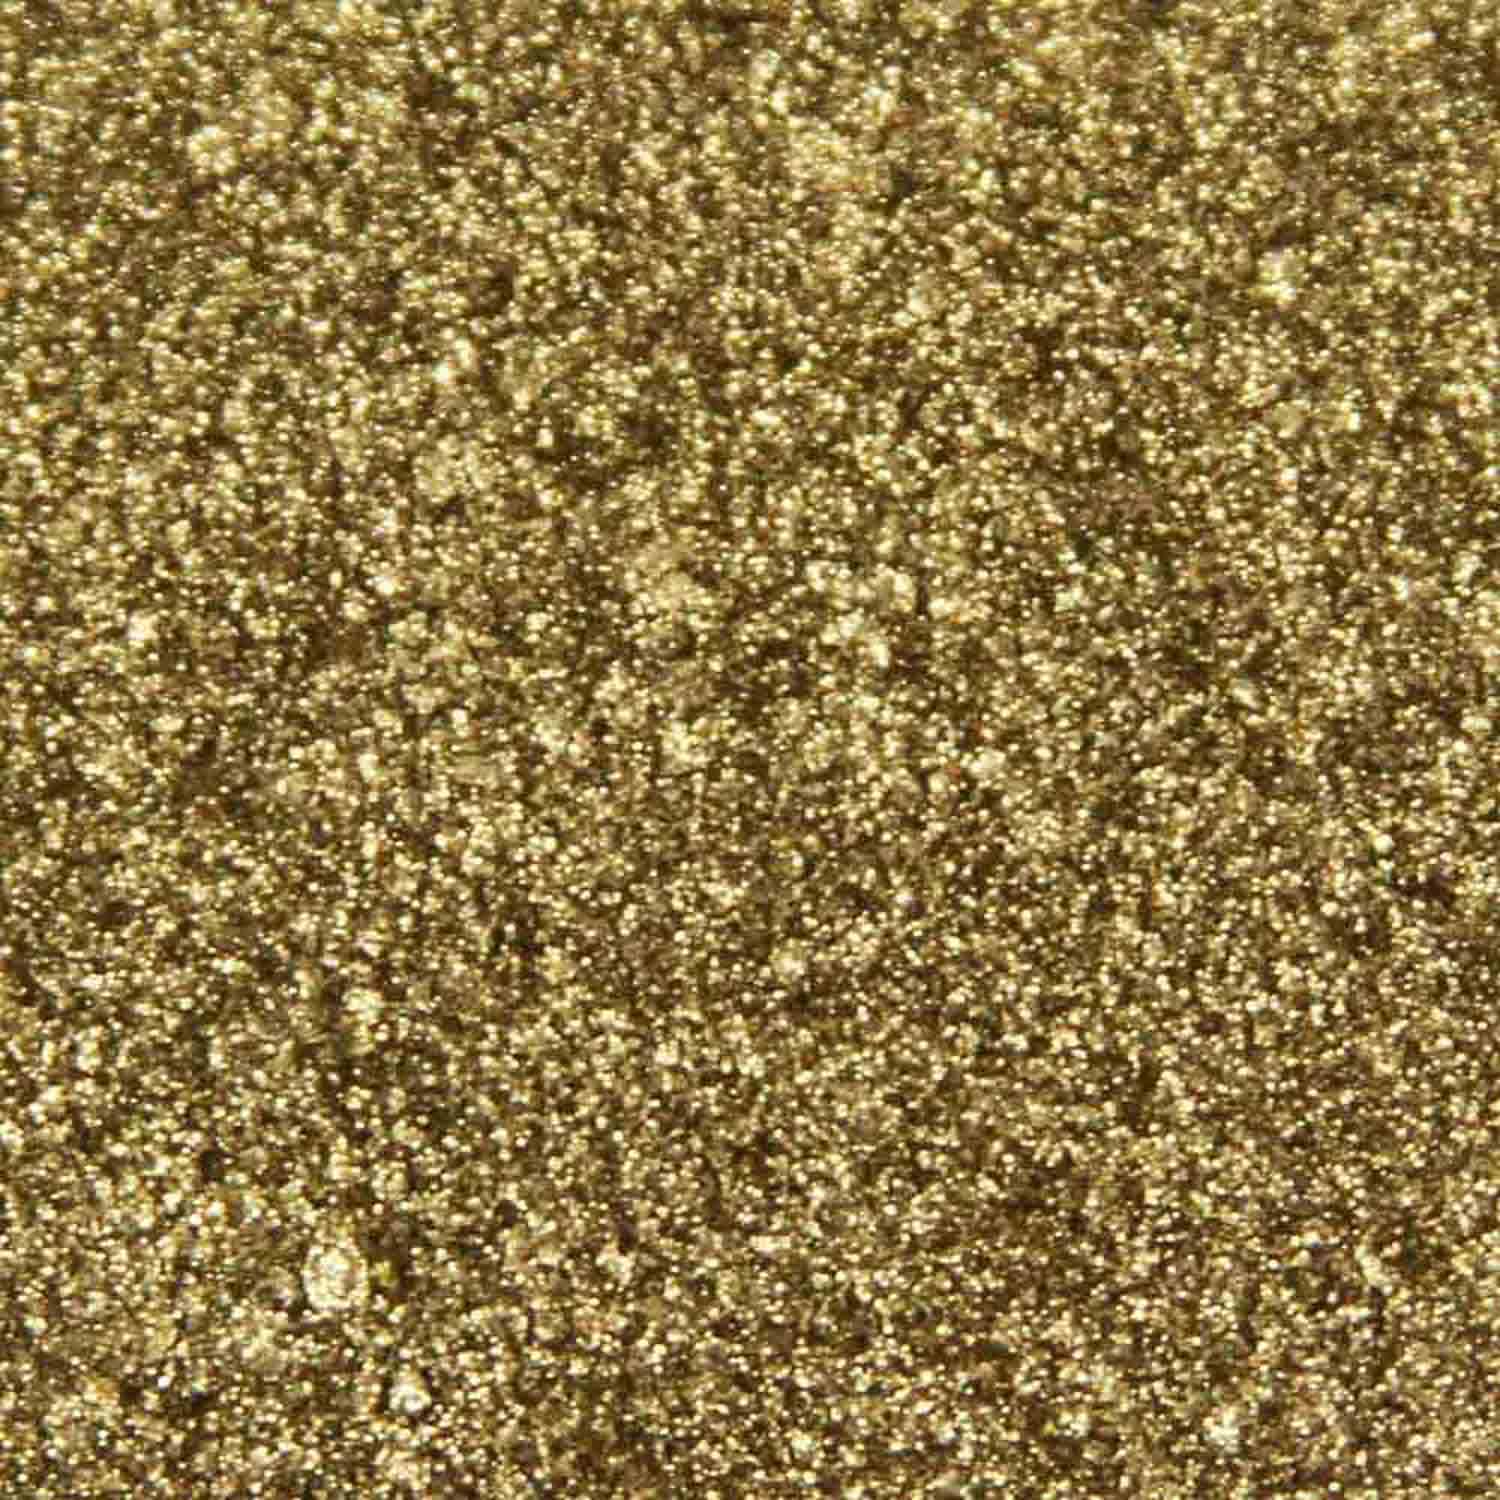 Imperial Metallic Gold Dust CK Products 4 oz Jar